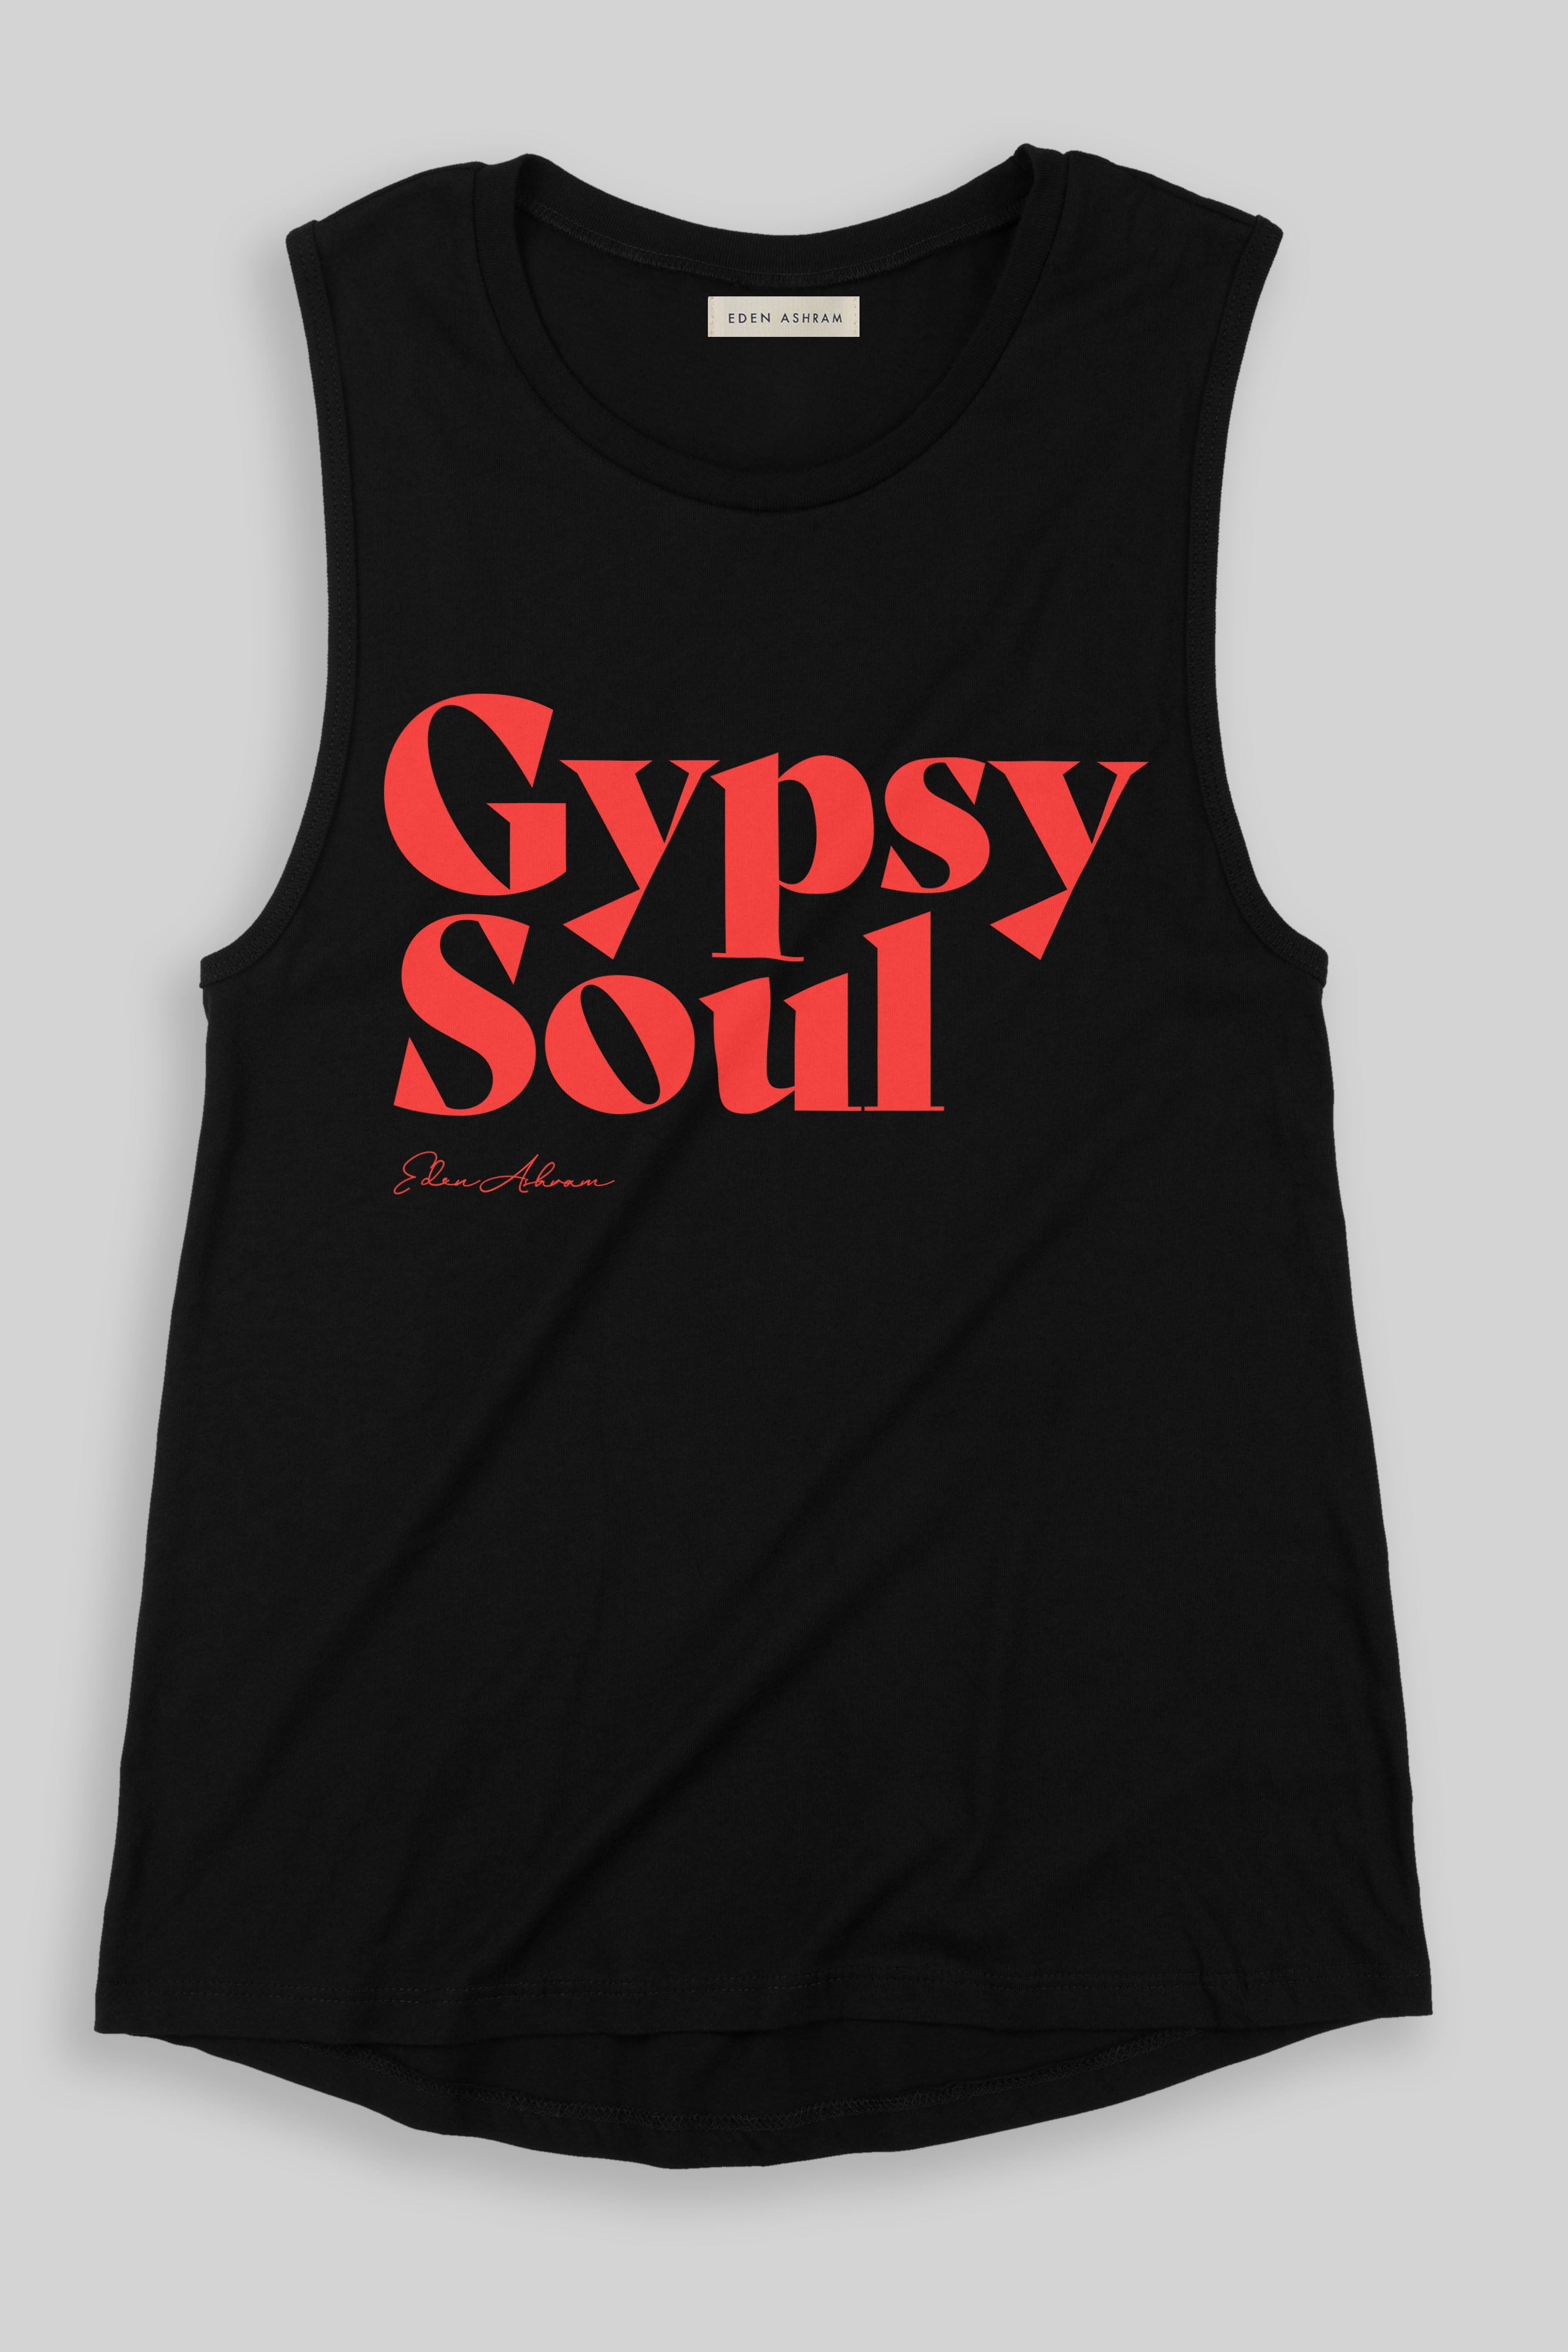 EDEN ASHRAM Gypsy Soul Premium Jersey Muscle Tank Vintage Black